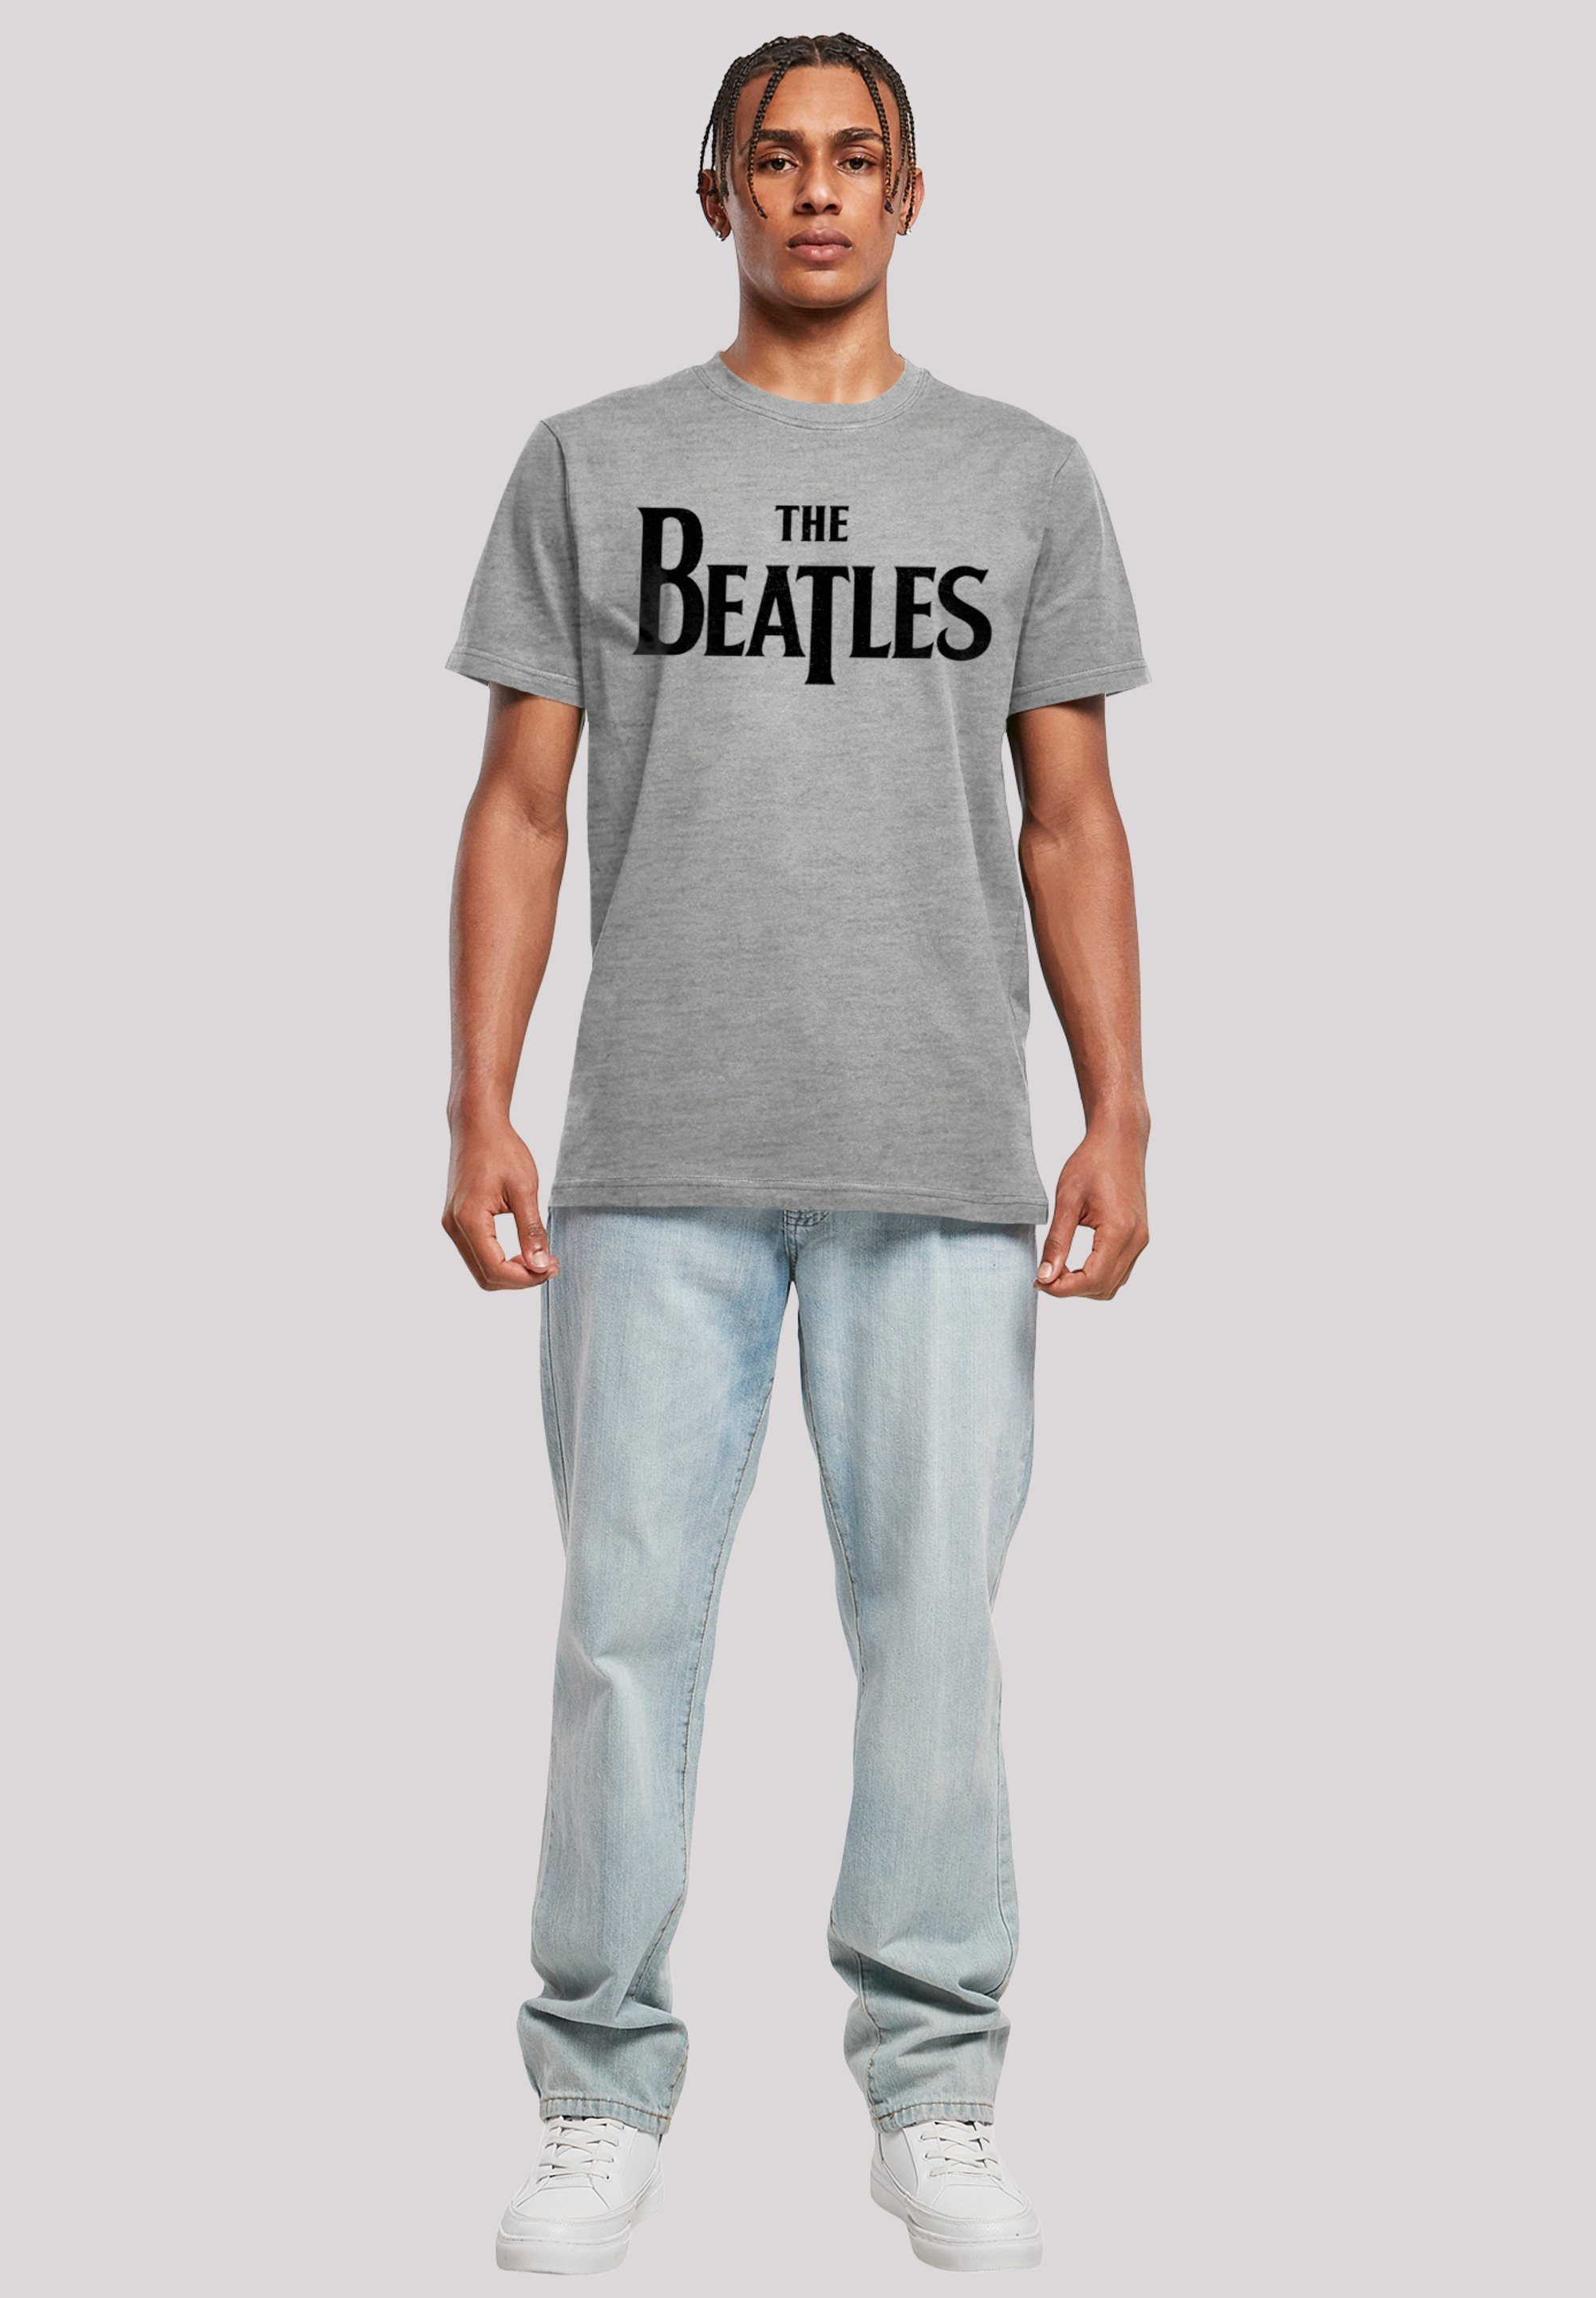 Logo Print Band T Black F4NT4STIC grey T-Shirt Beatles heather The Drop